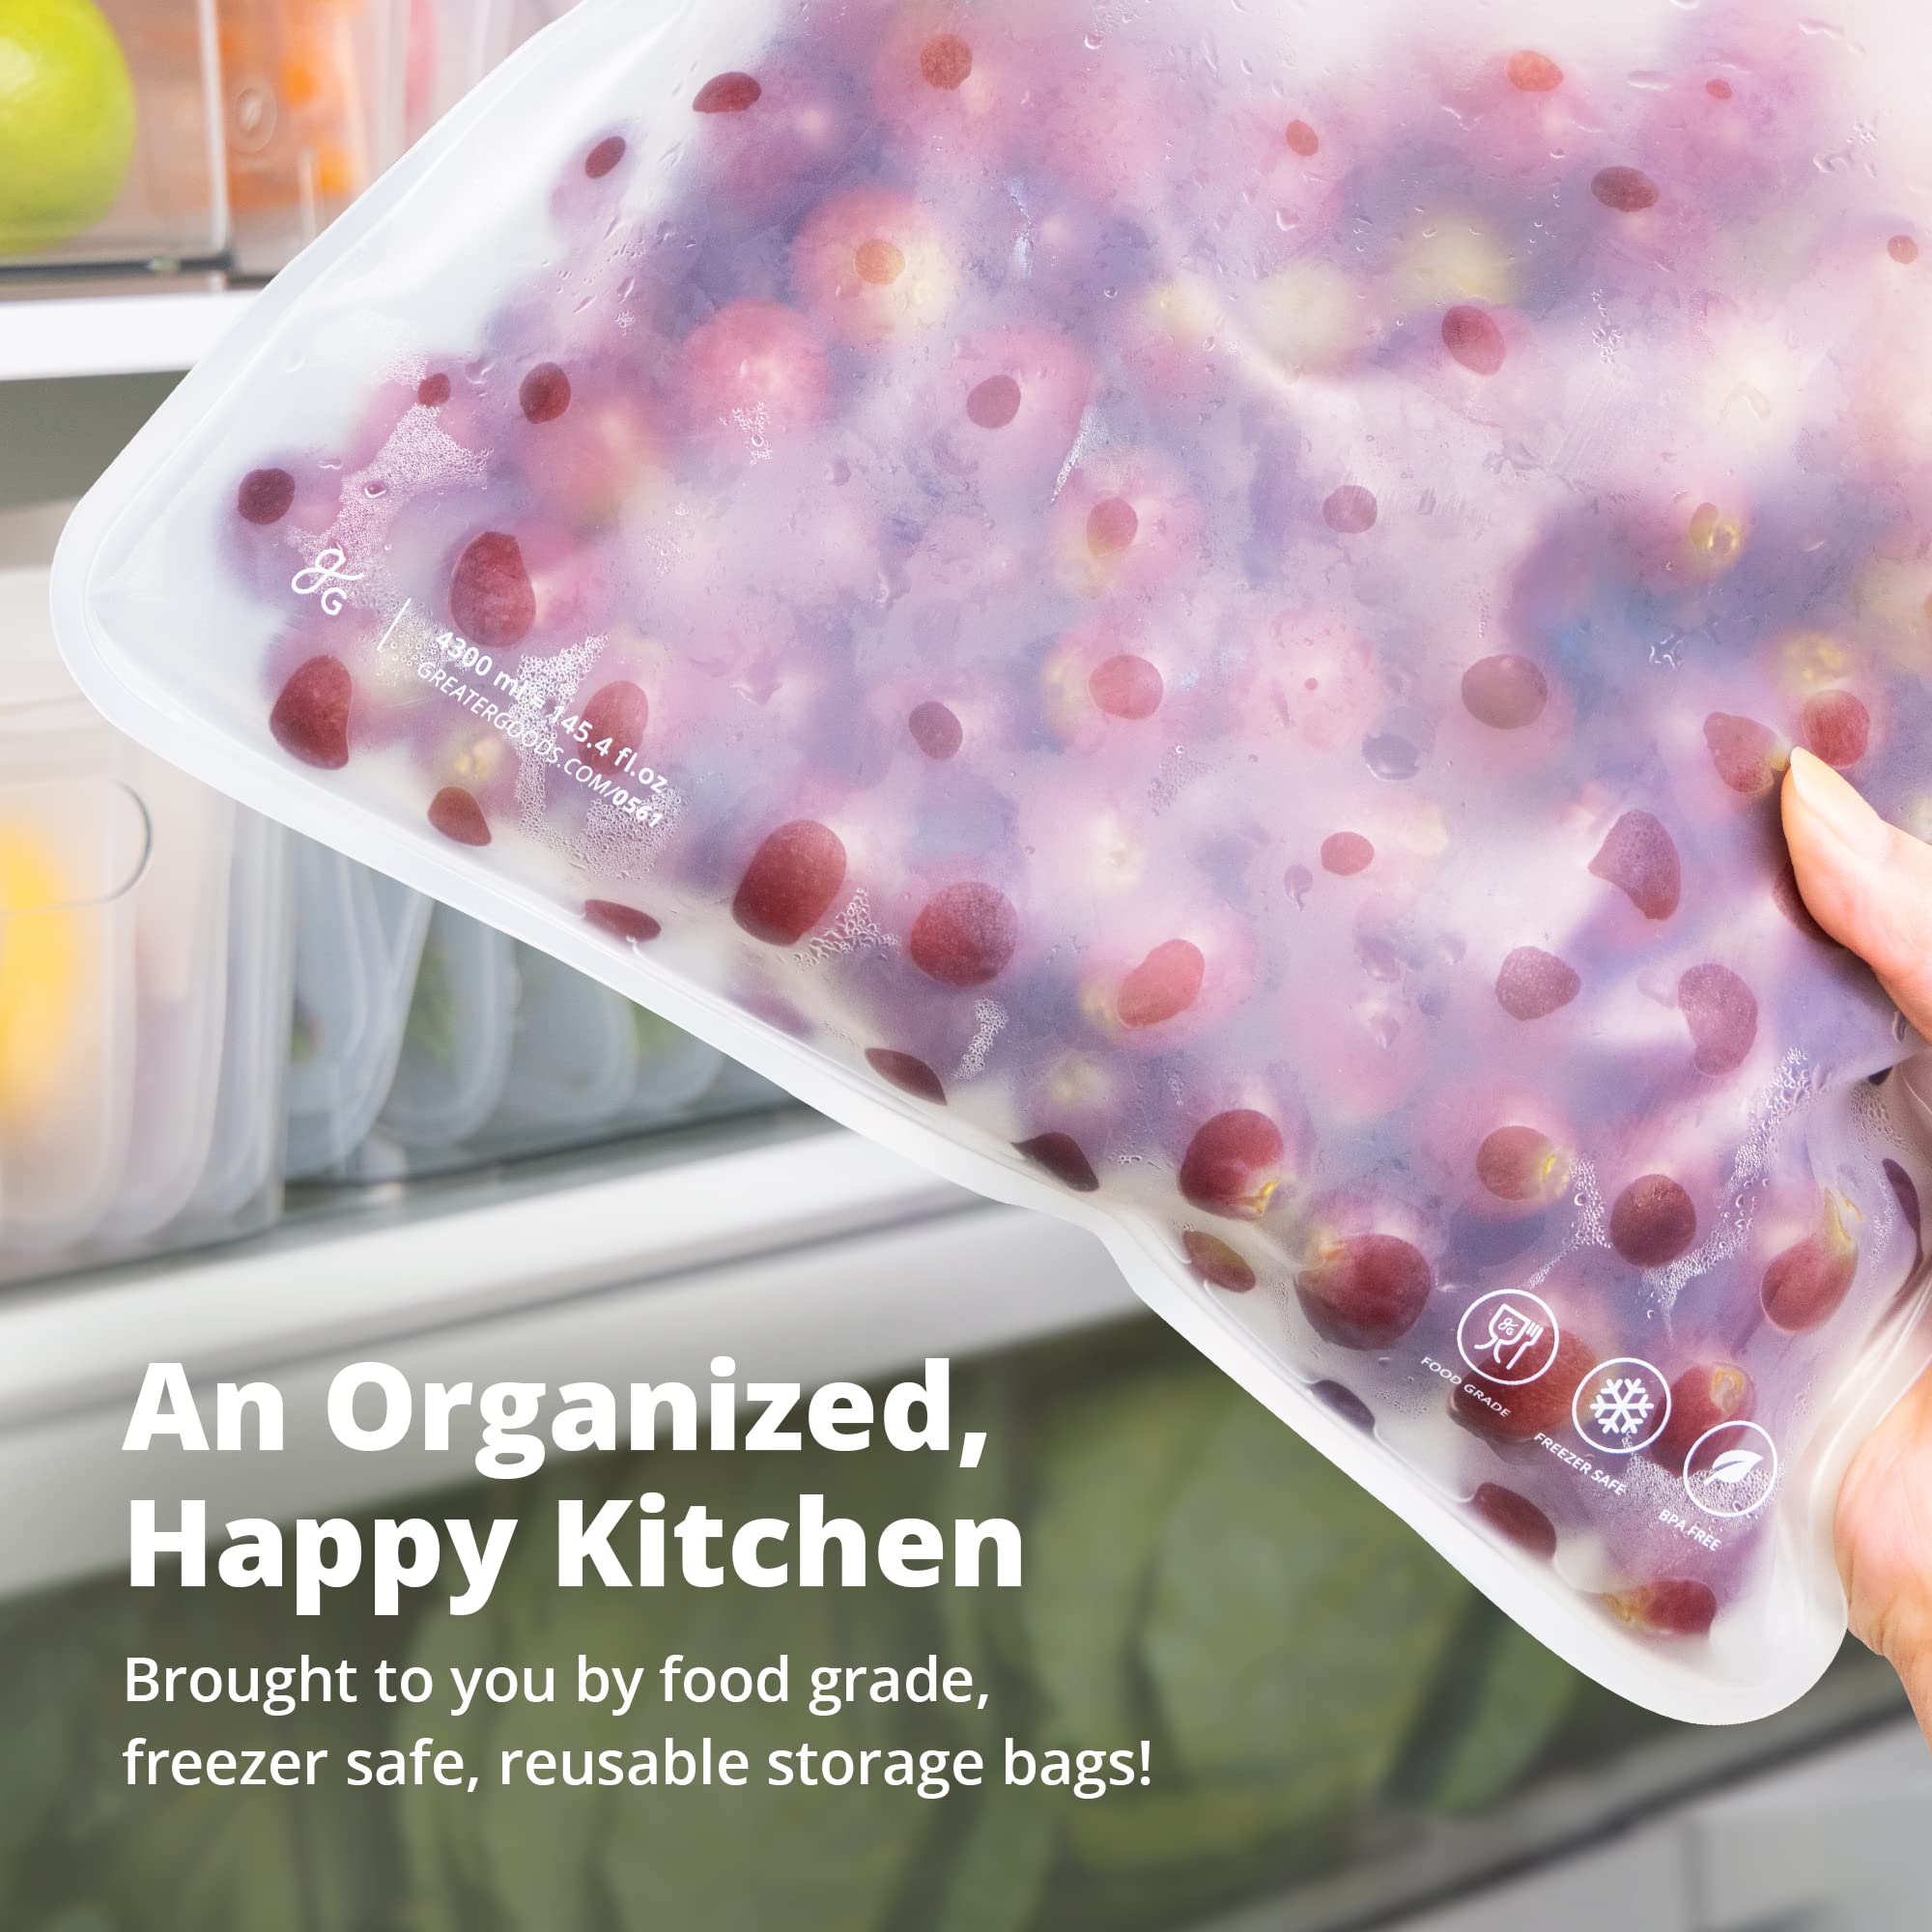 Greater Goods Reusable Food Storage Bags - BPA Free, Food Grade Ziplock Freezer Bags Made from PEVA (2 Small + 4 Medium + 2 Large)